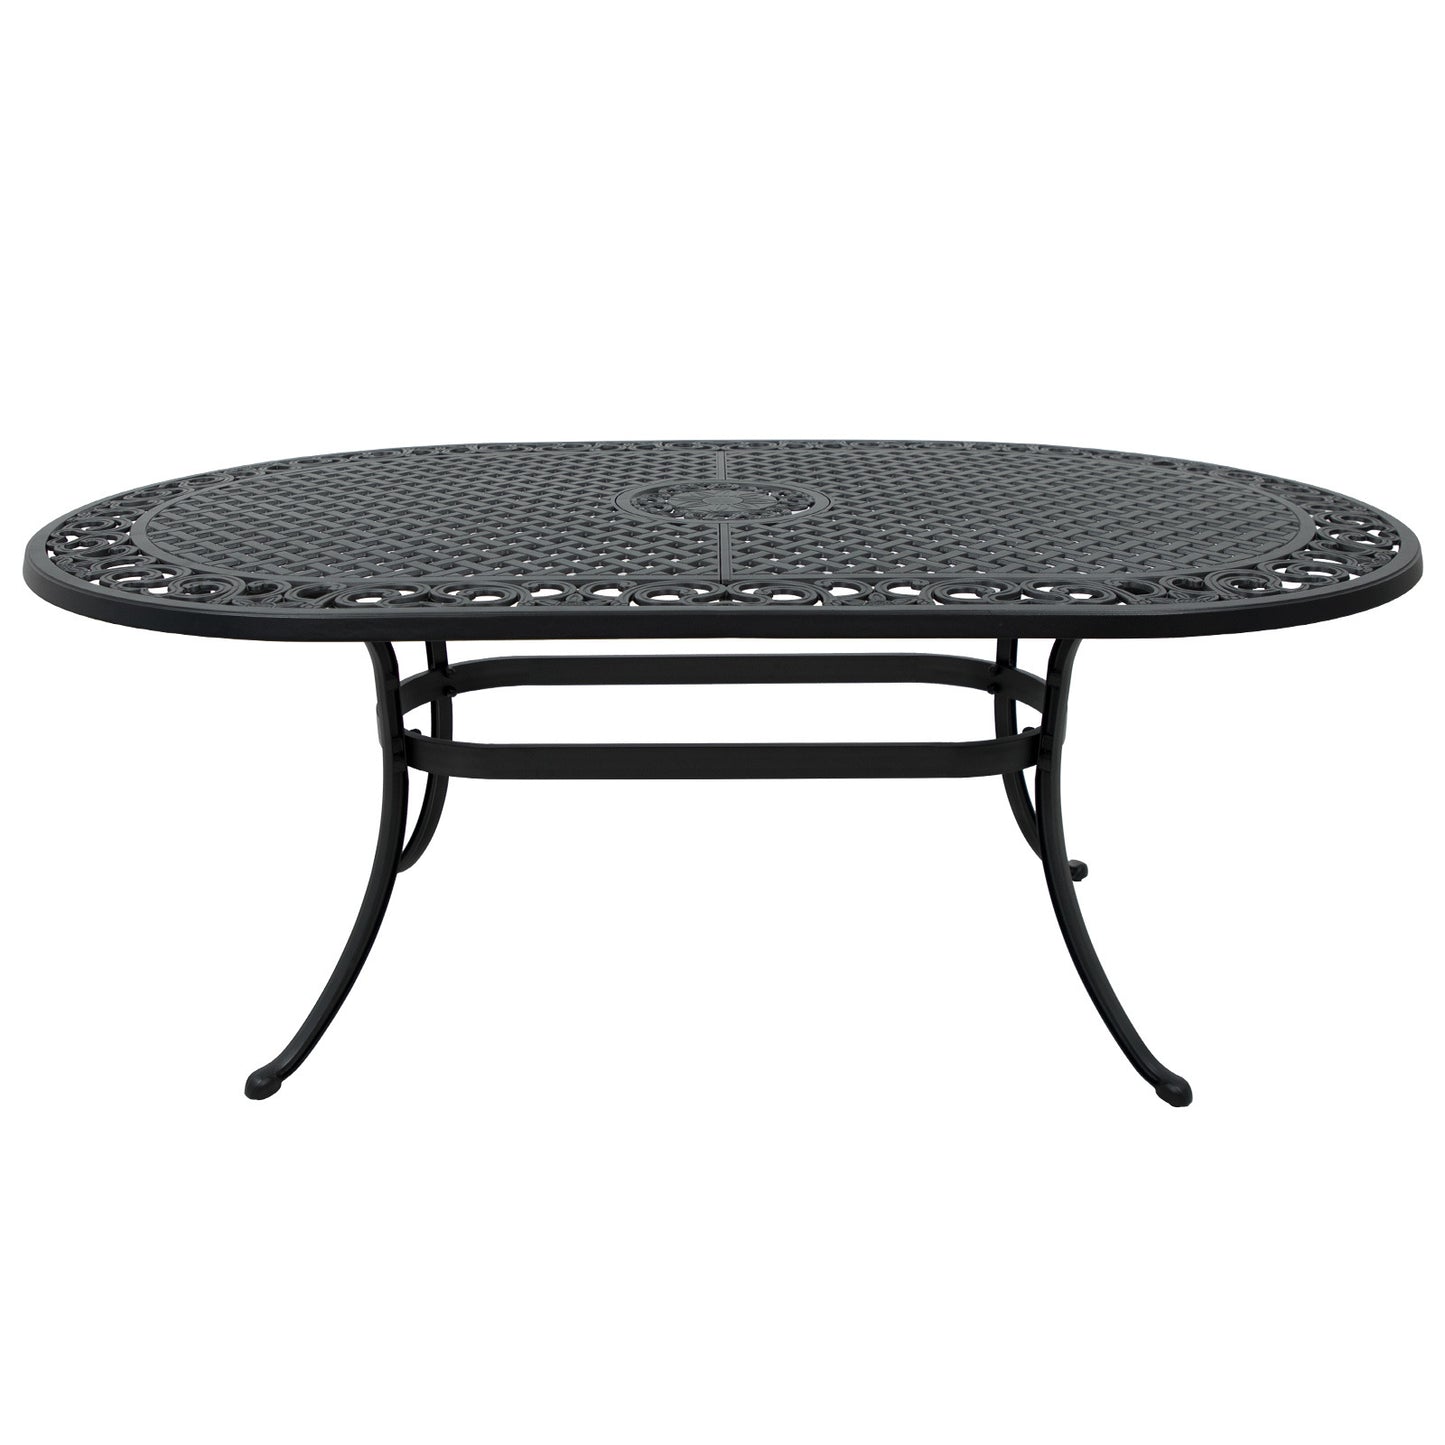 Oval Cast Aluminum Patio Table with Umbrella Hole